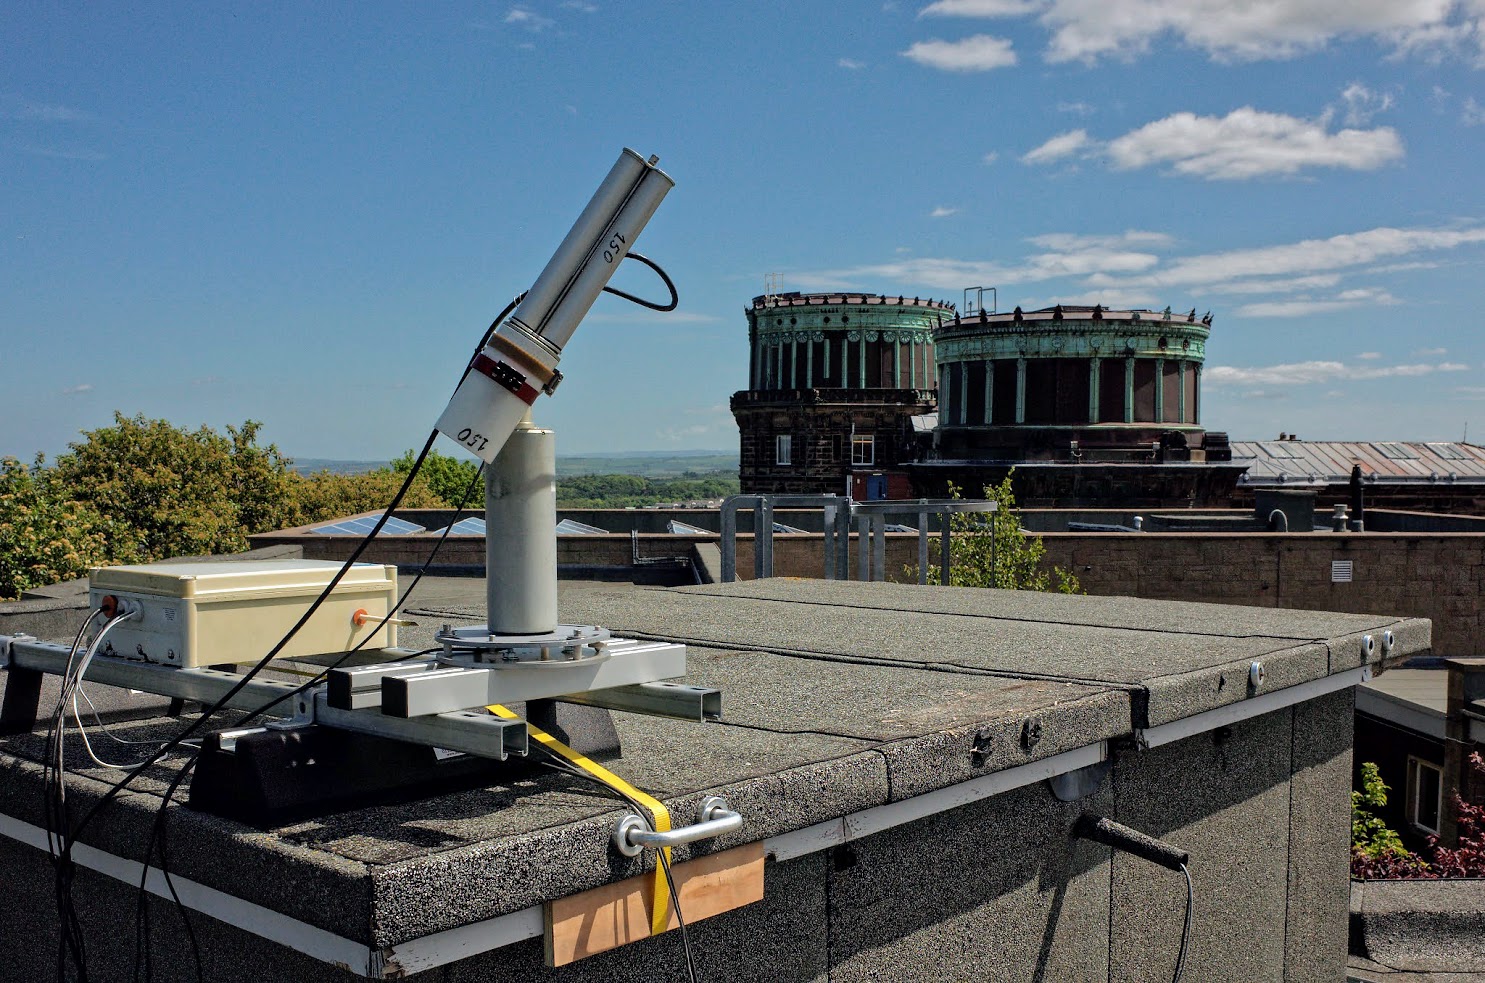 Cimel sunphotometer on the Edinburgh Royal Observatory